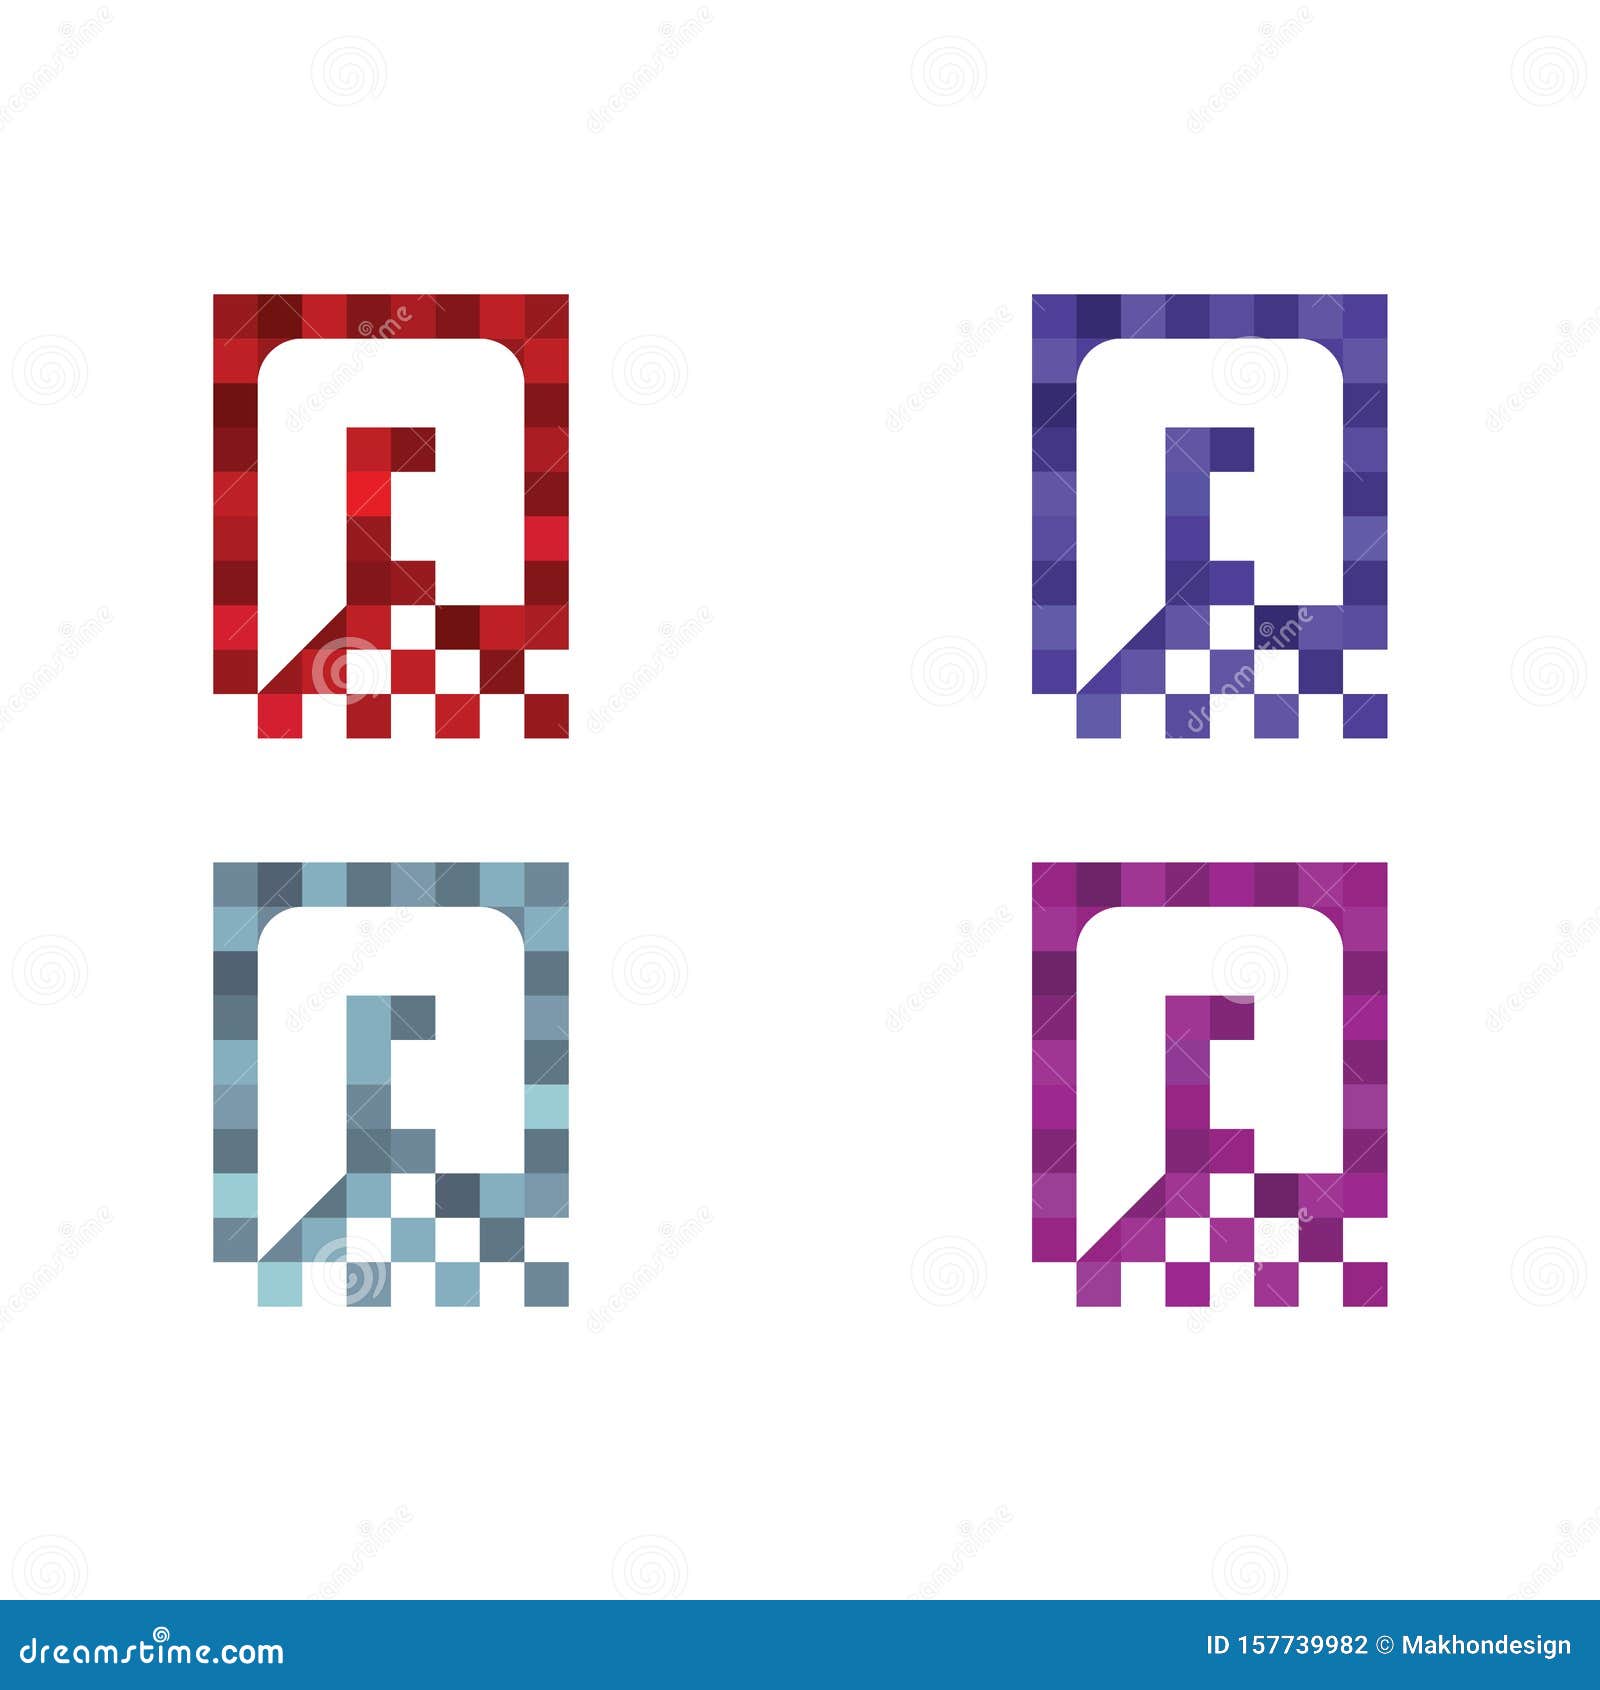 Pixel Art Design Of The A Letter Logo A Letter Pixel Motion